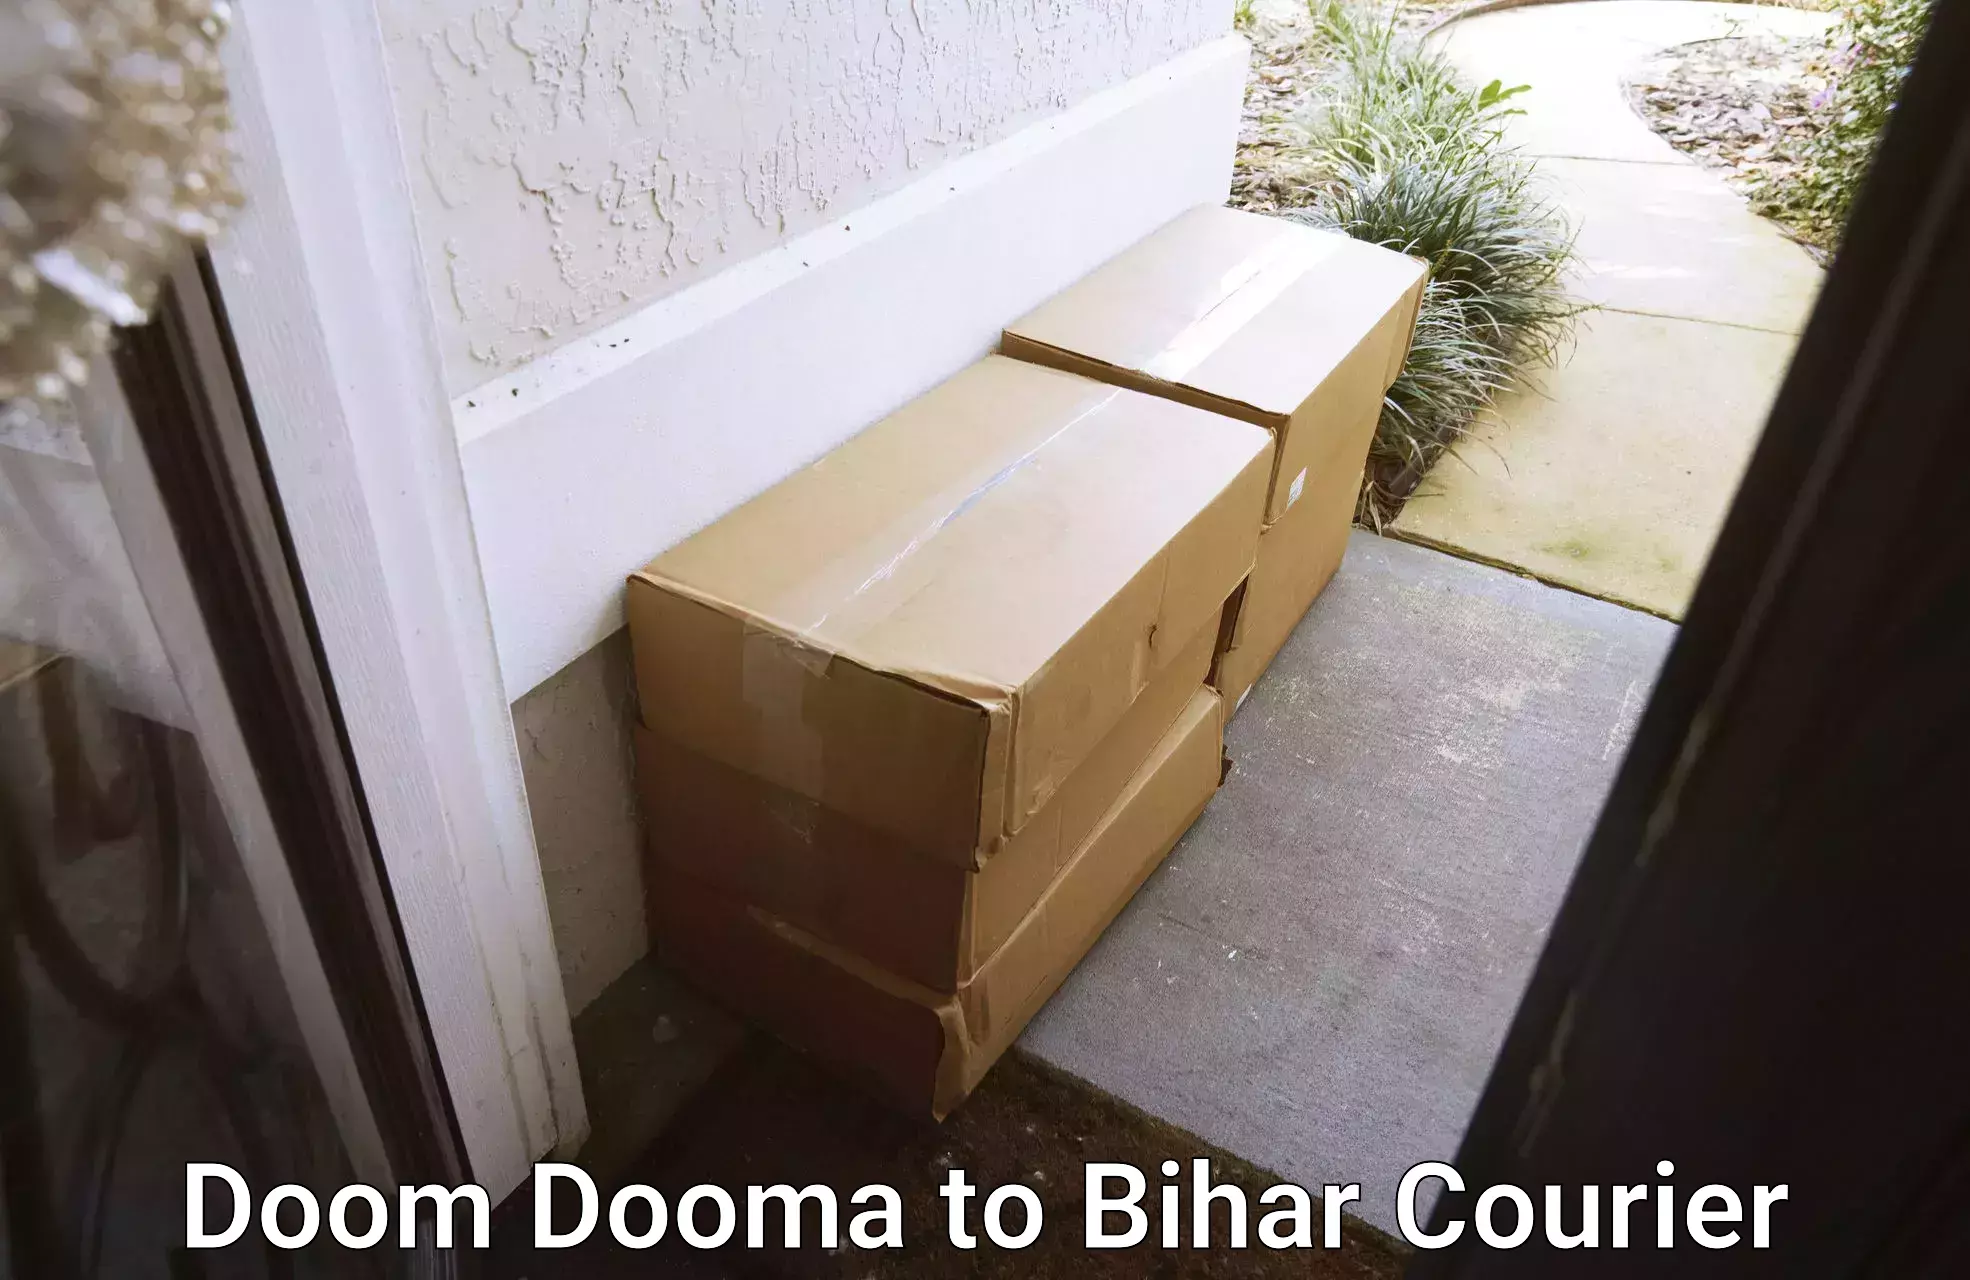 Enhanced delivery experience in Doom Dooma to Bihar